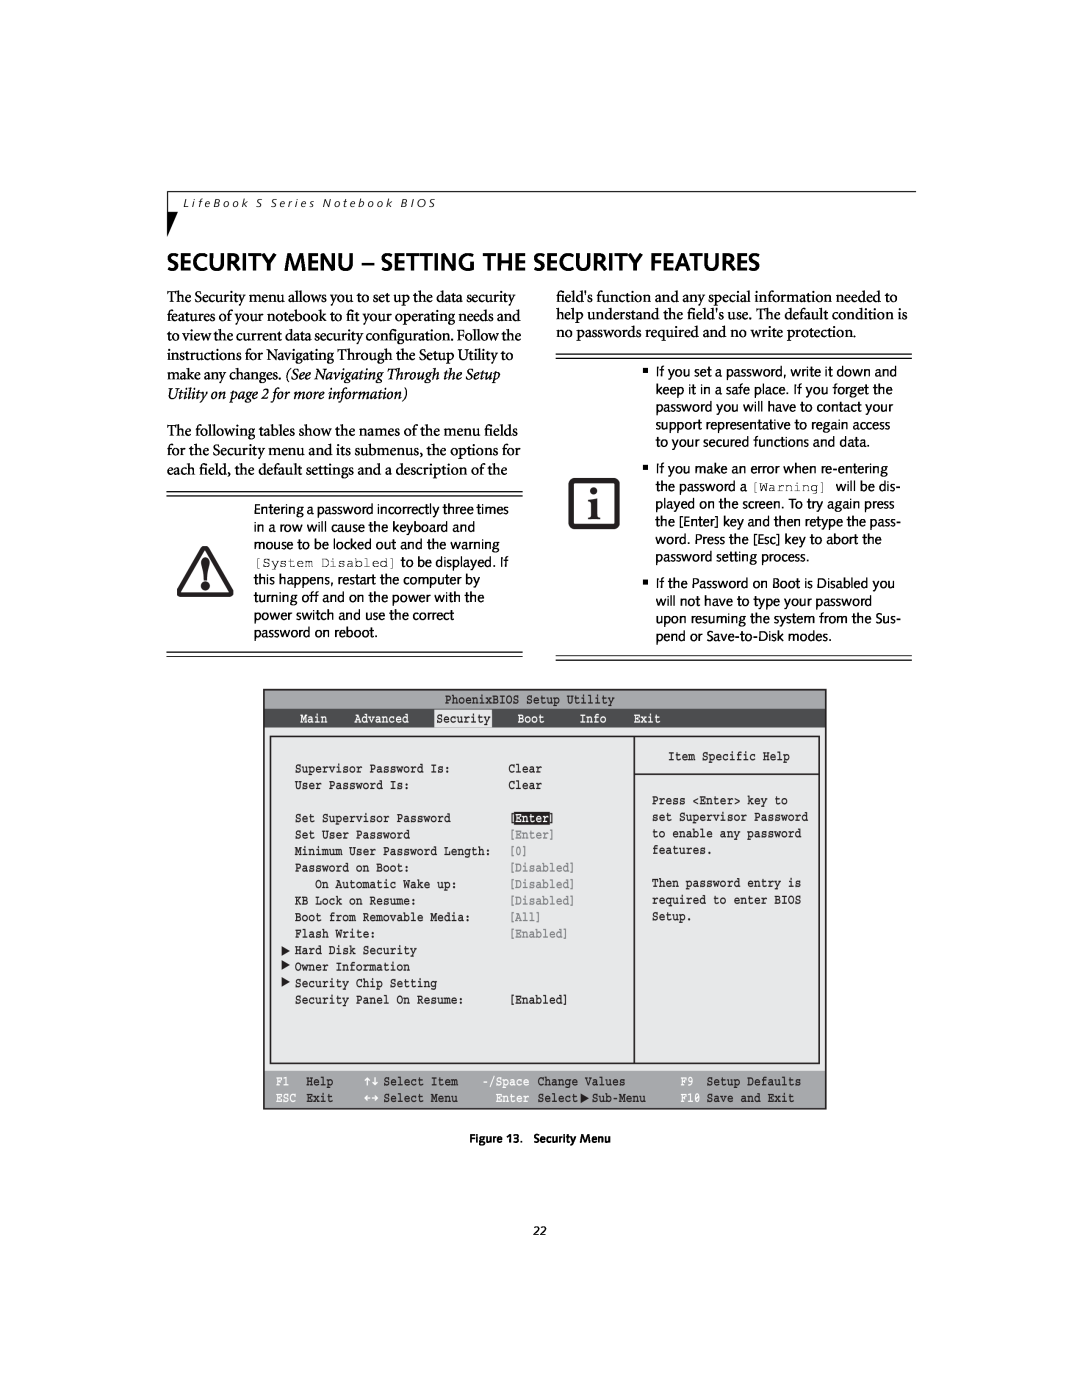 Fujitsu S7110 manual Security Menu - Setting The Security Features, Enter 